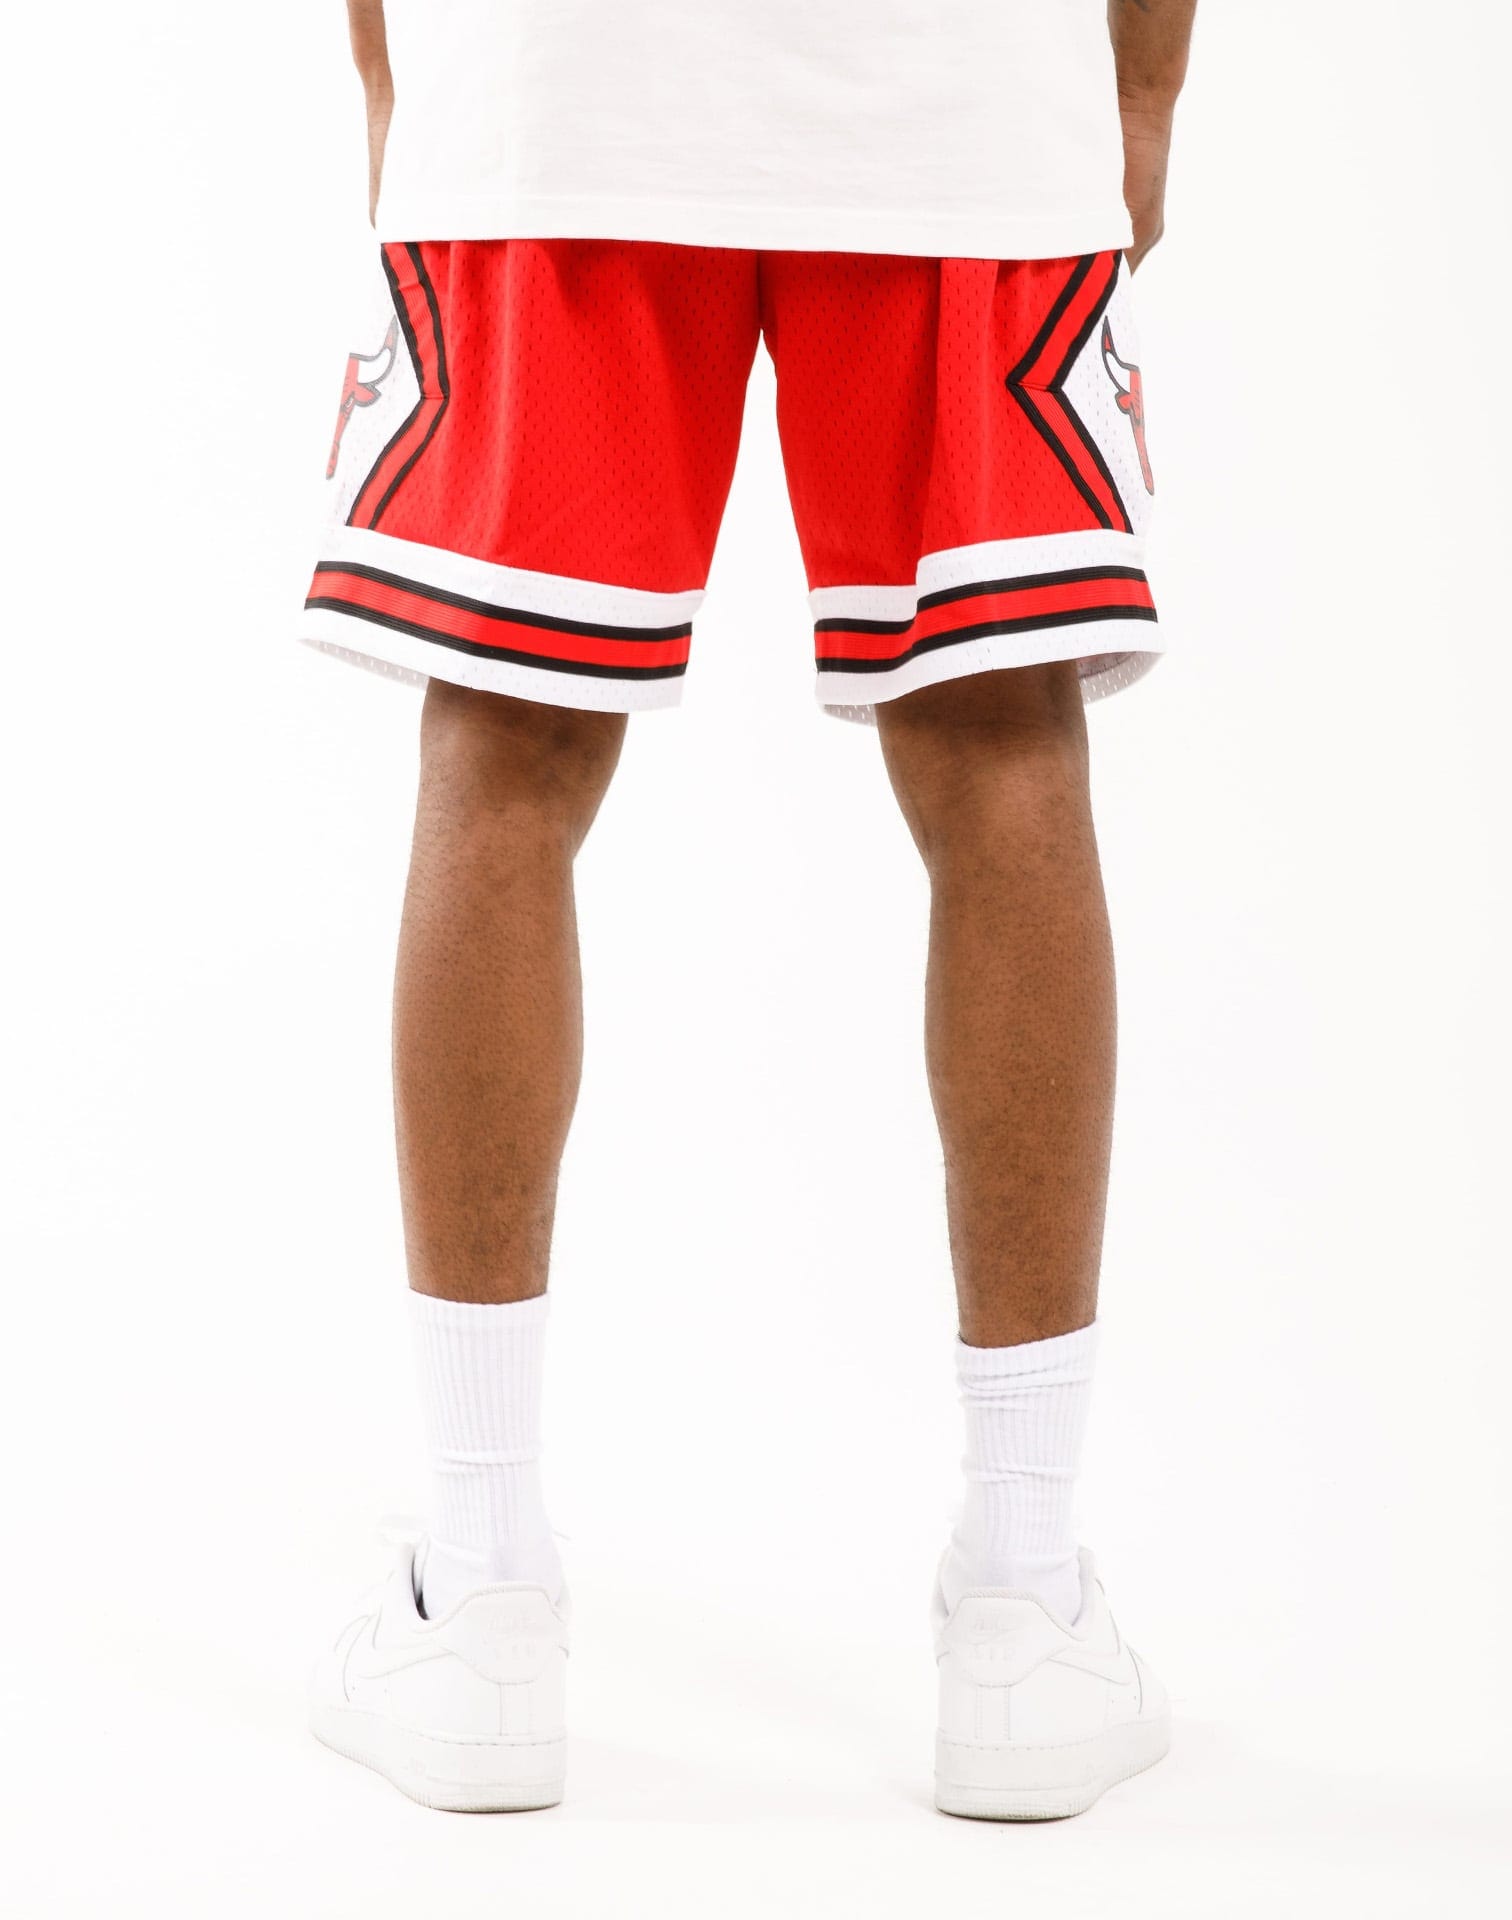 Mitchell & Ness Bulls Swingman Basketball Shorts